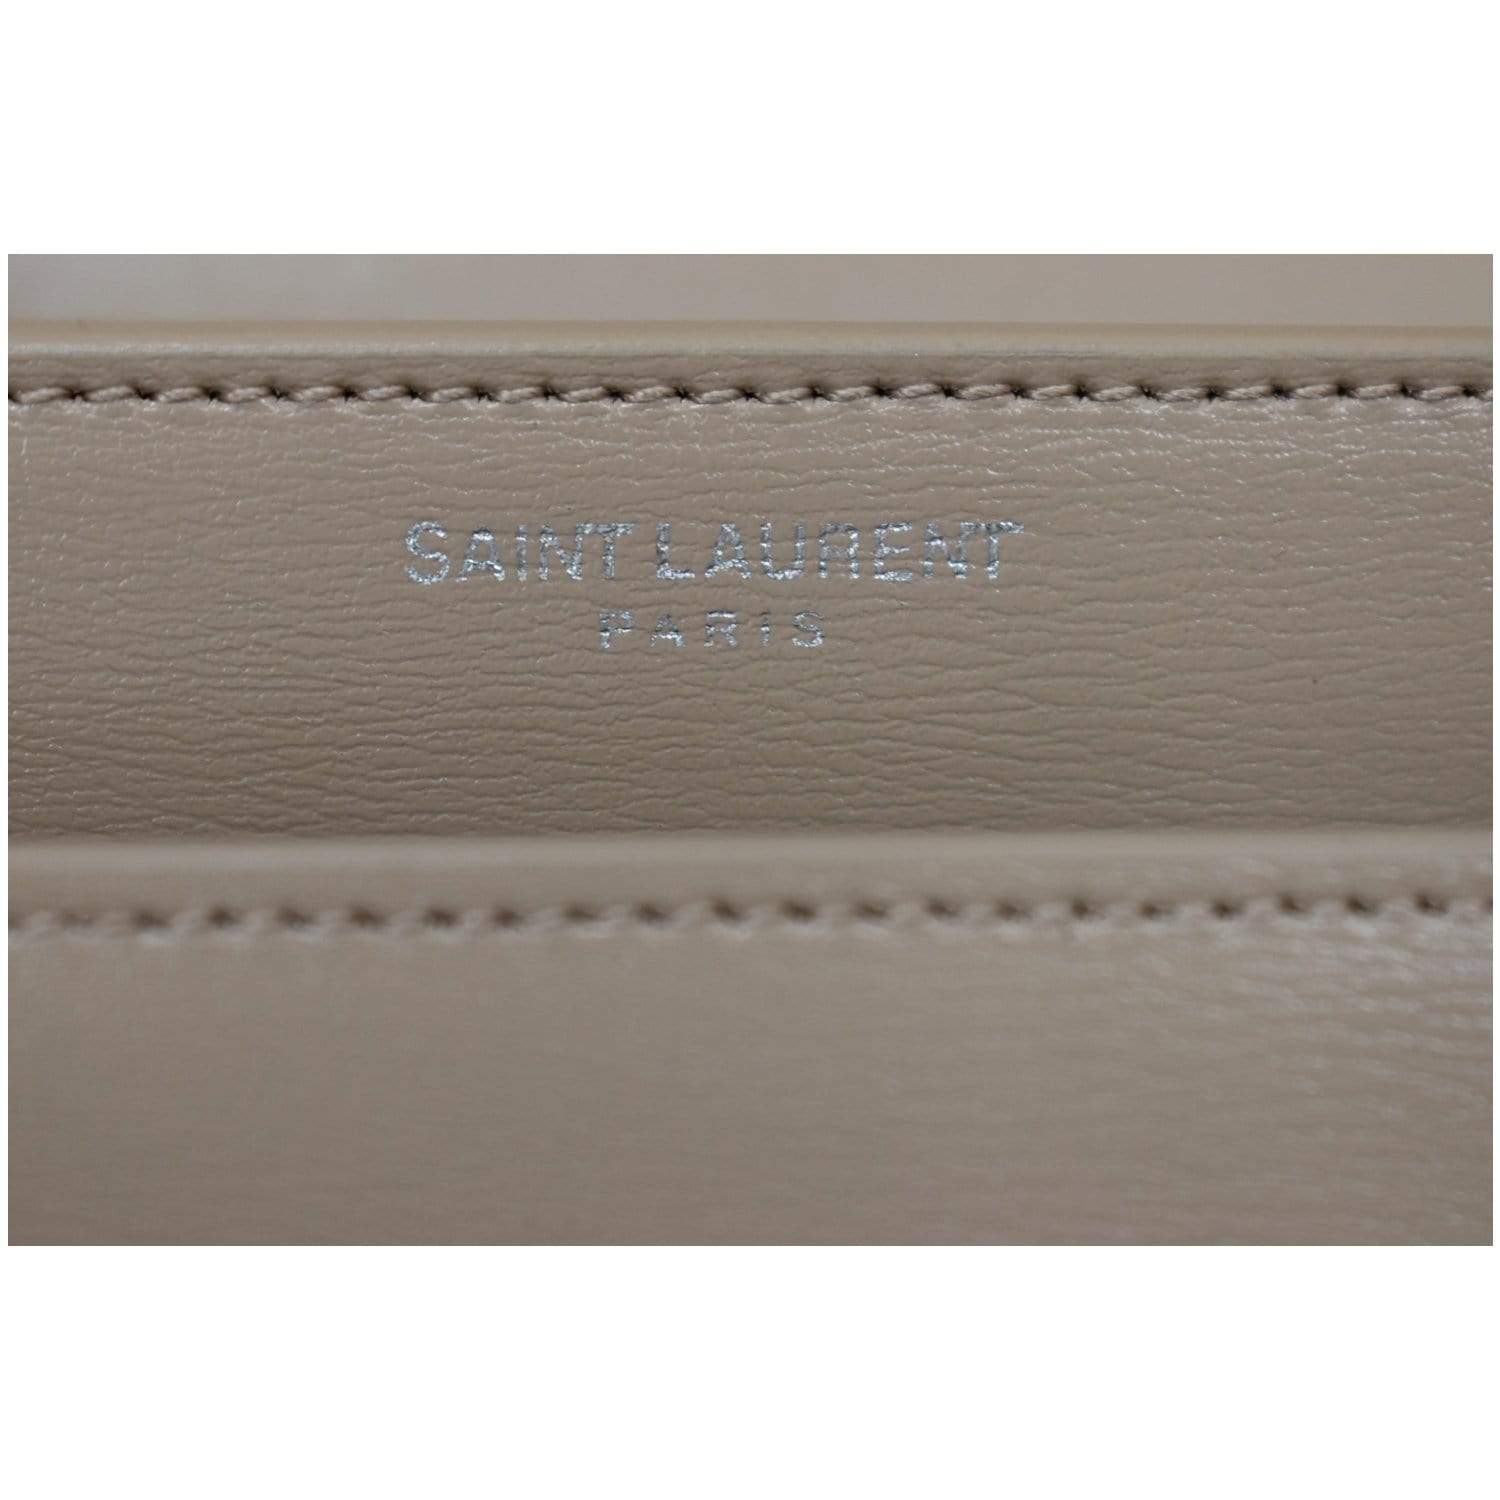 Monogram Leather Card Holder in Beige - Saint Laurent